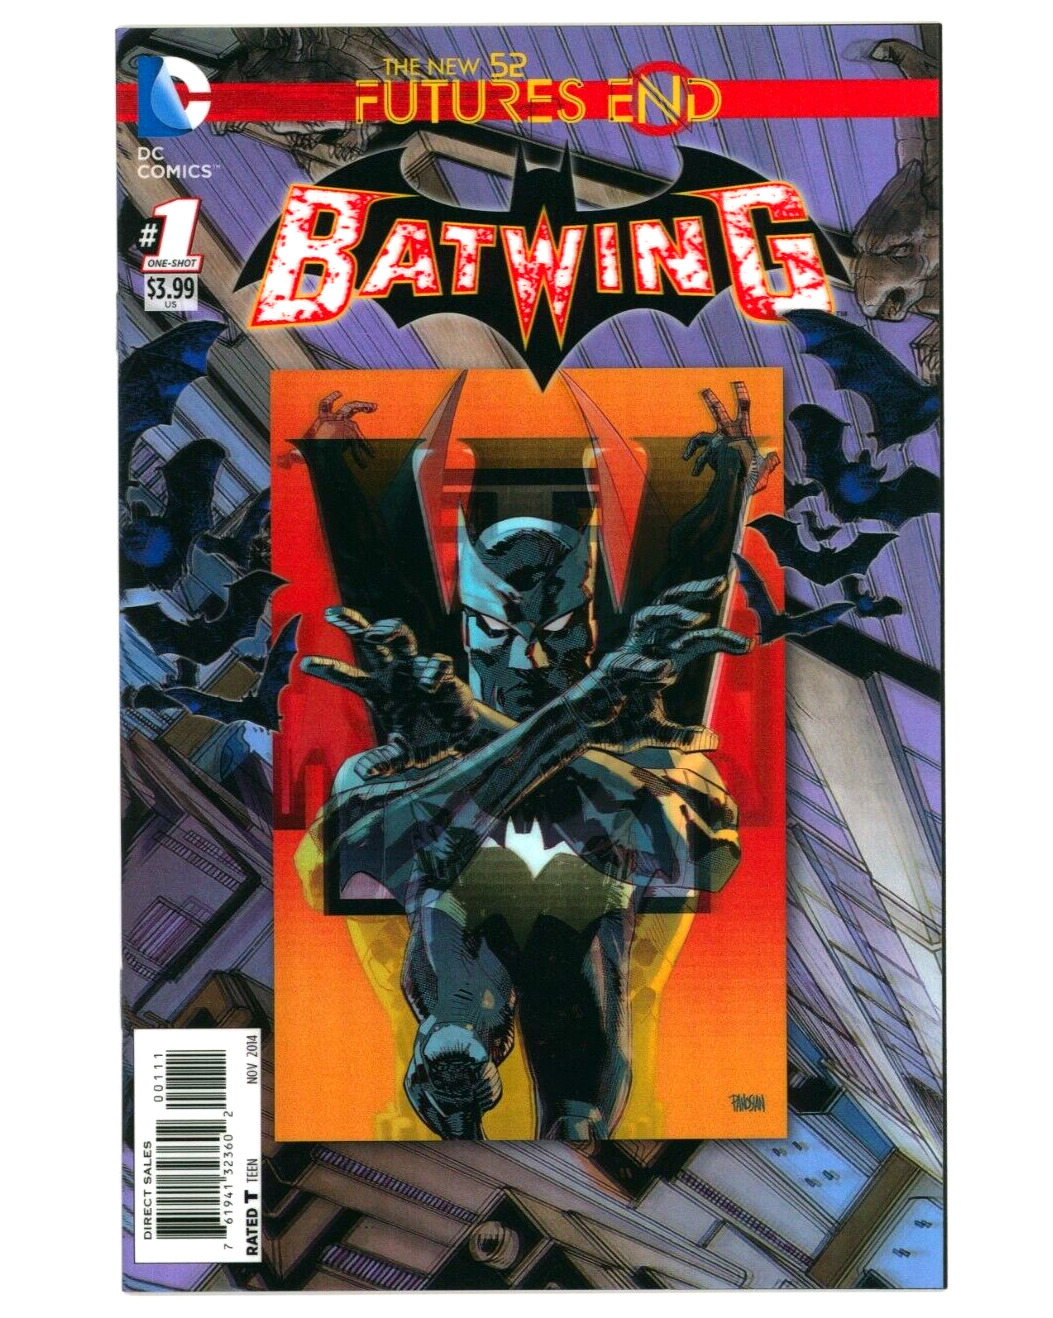 DC Comics New 52 BATWING: FUTURES END #1 Lenticular Cover